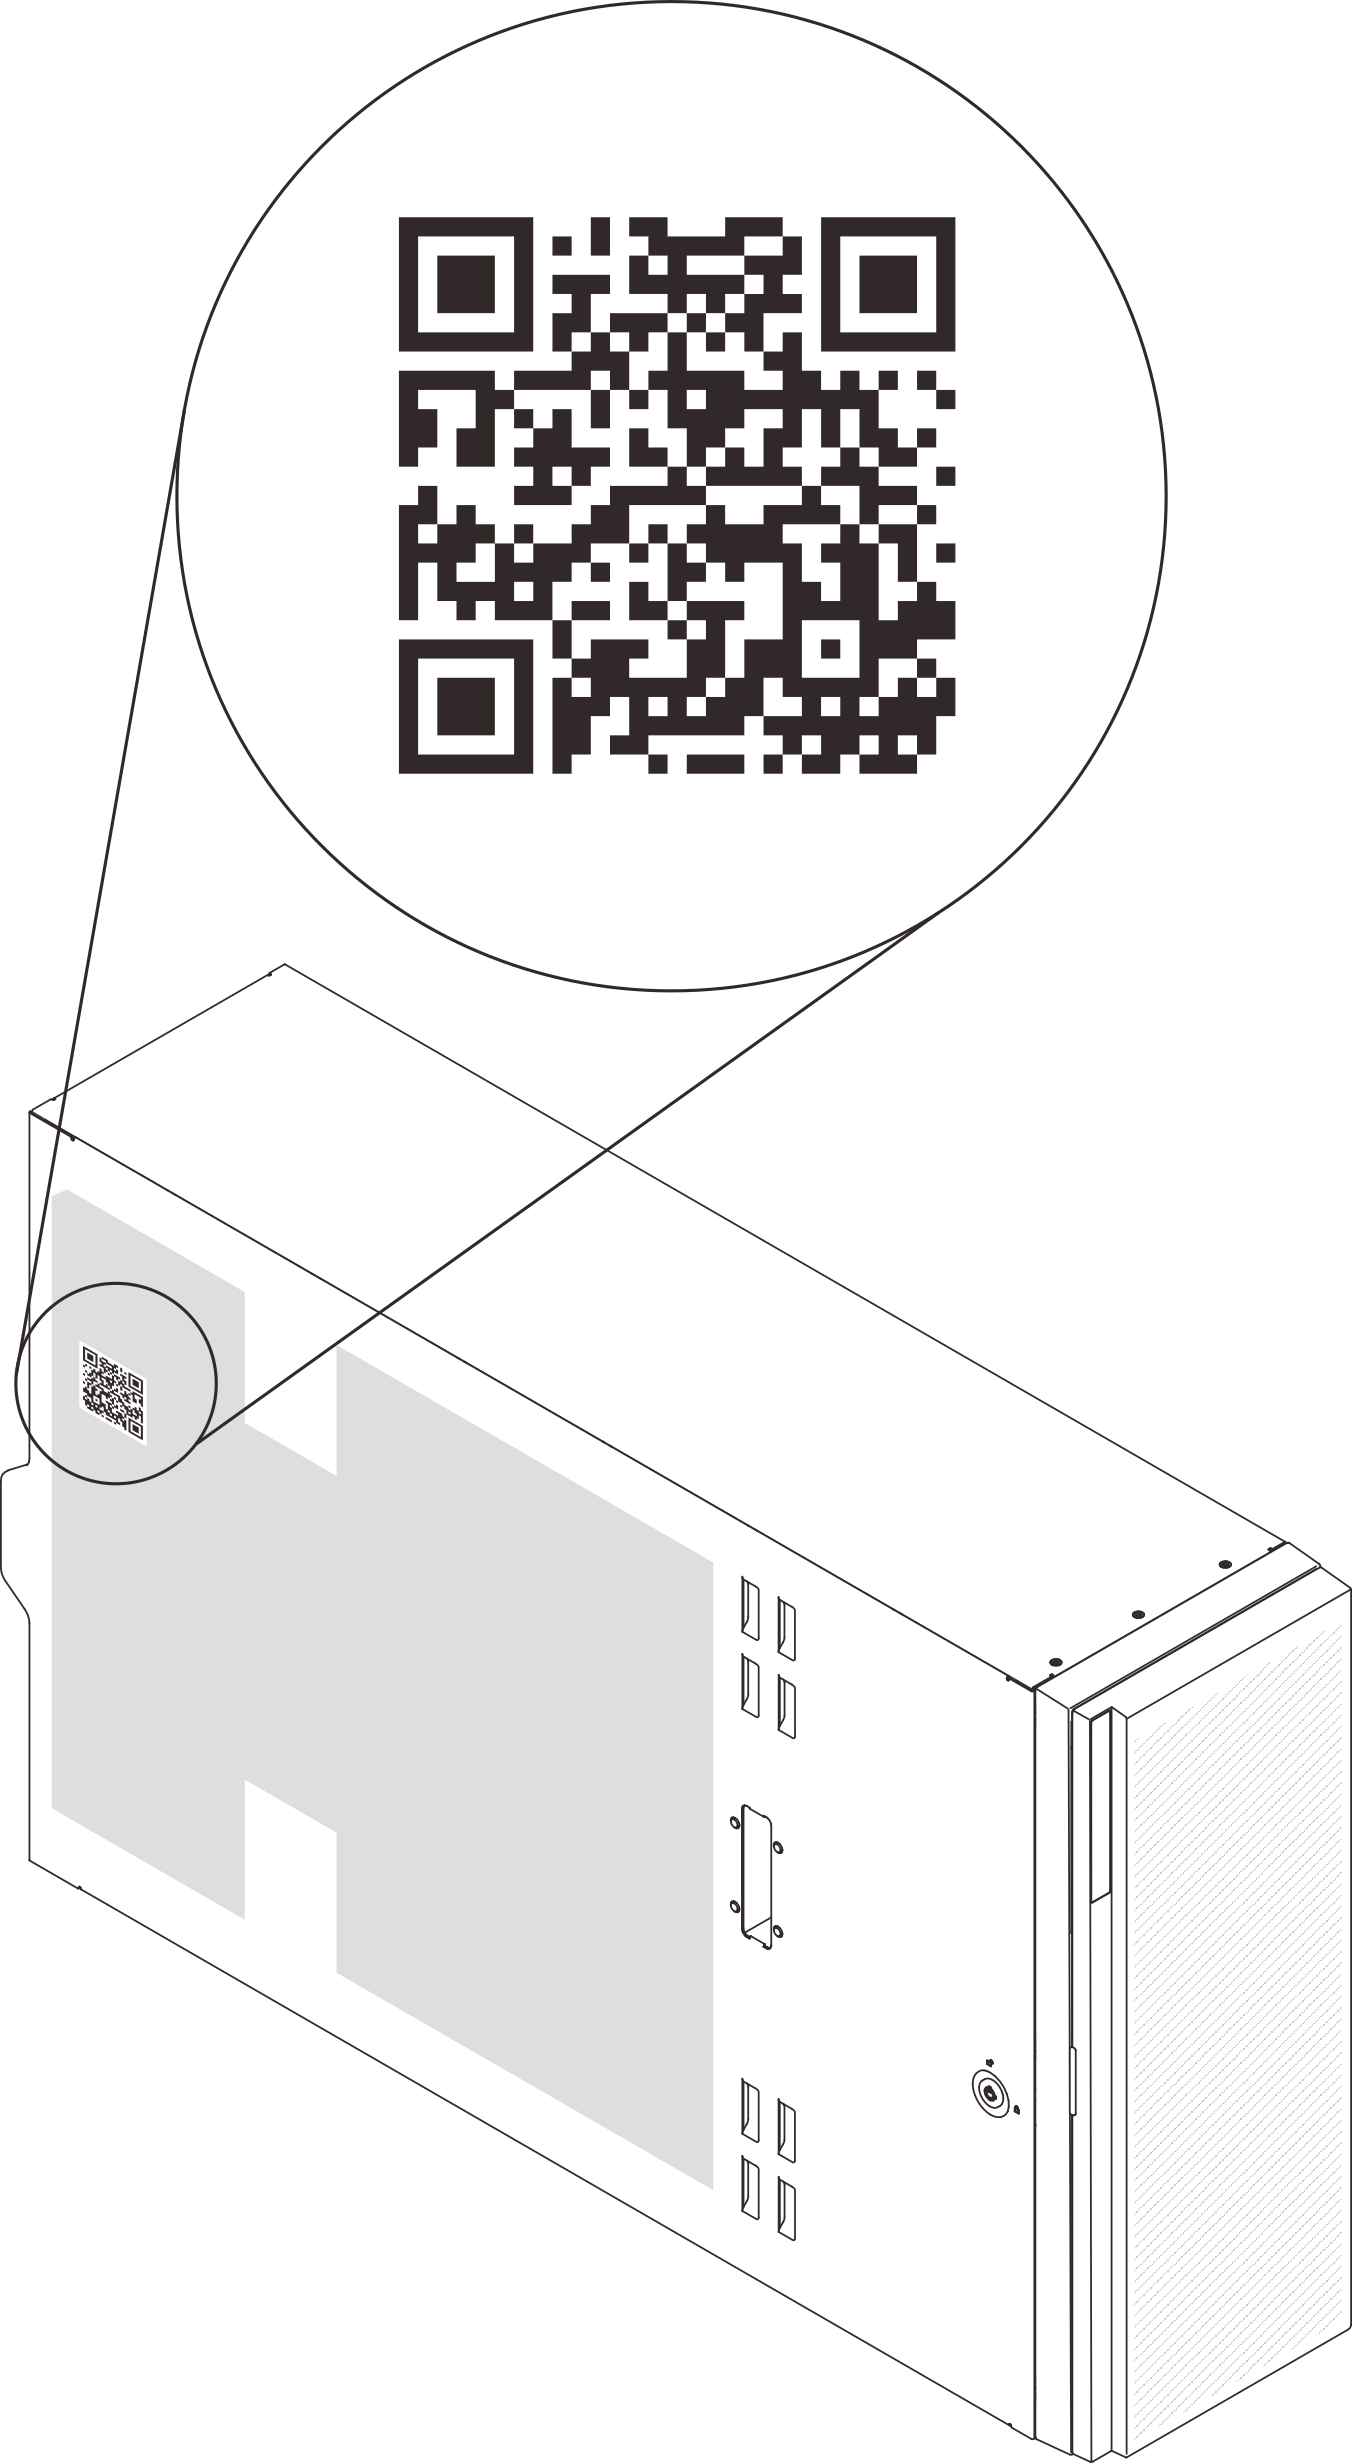 Location of QR code